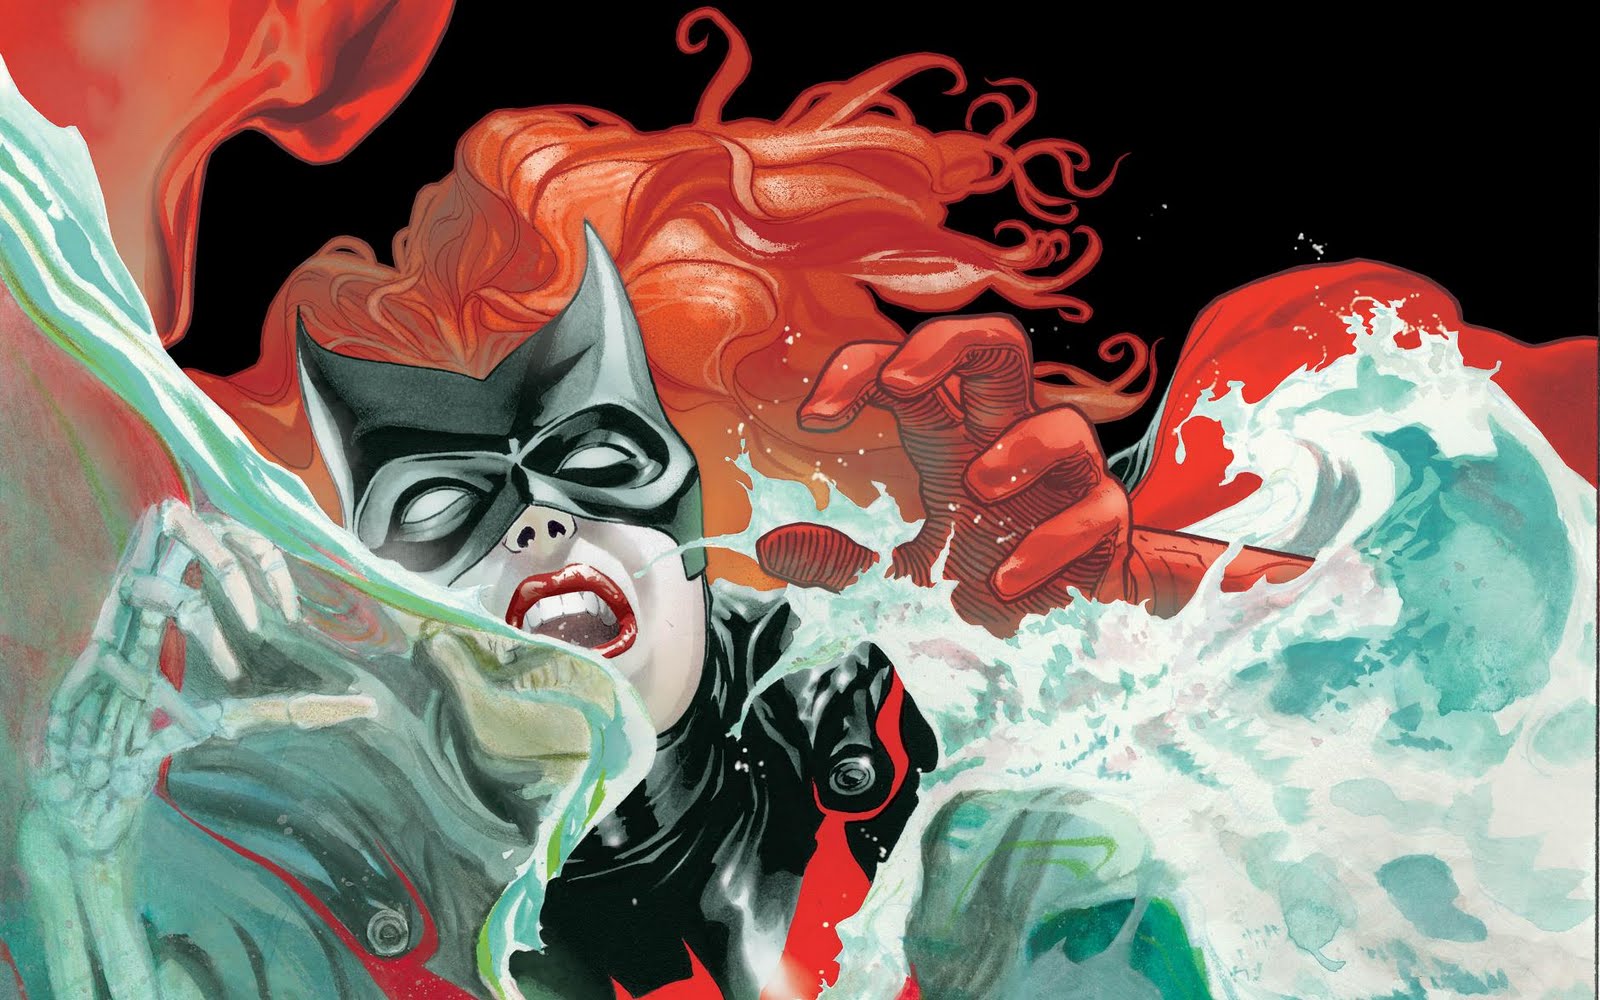 Super Punch Batwoman cover / wallpaper